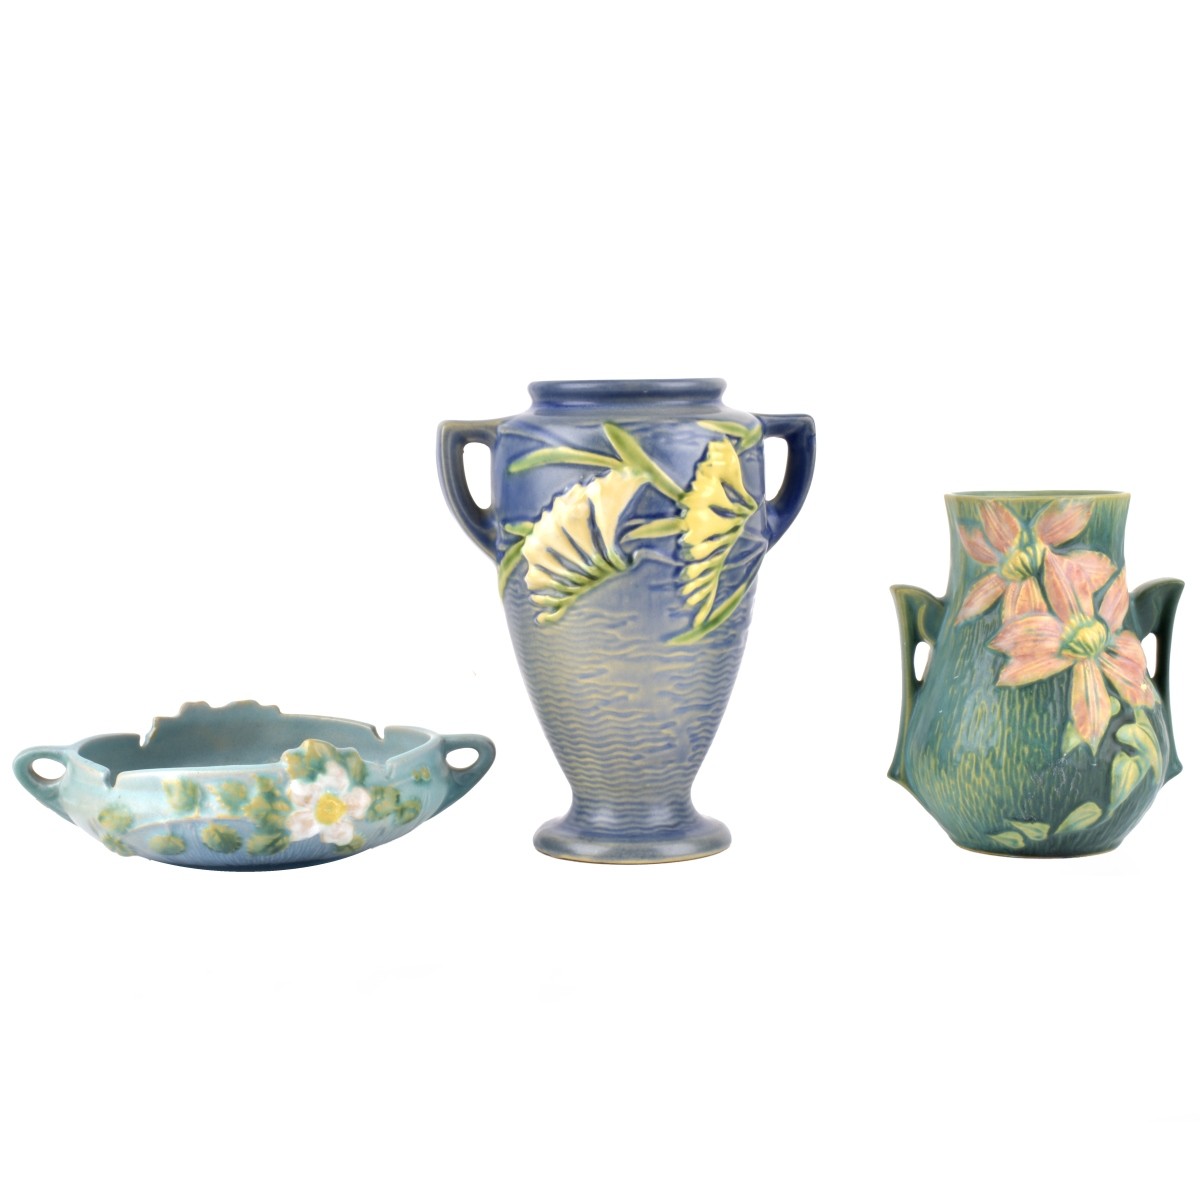 Three (3) Roseville Pottery Tableware